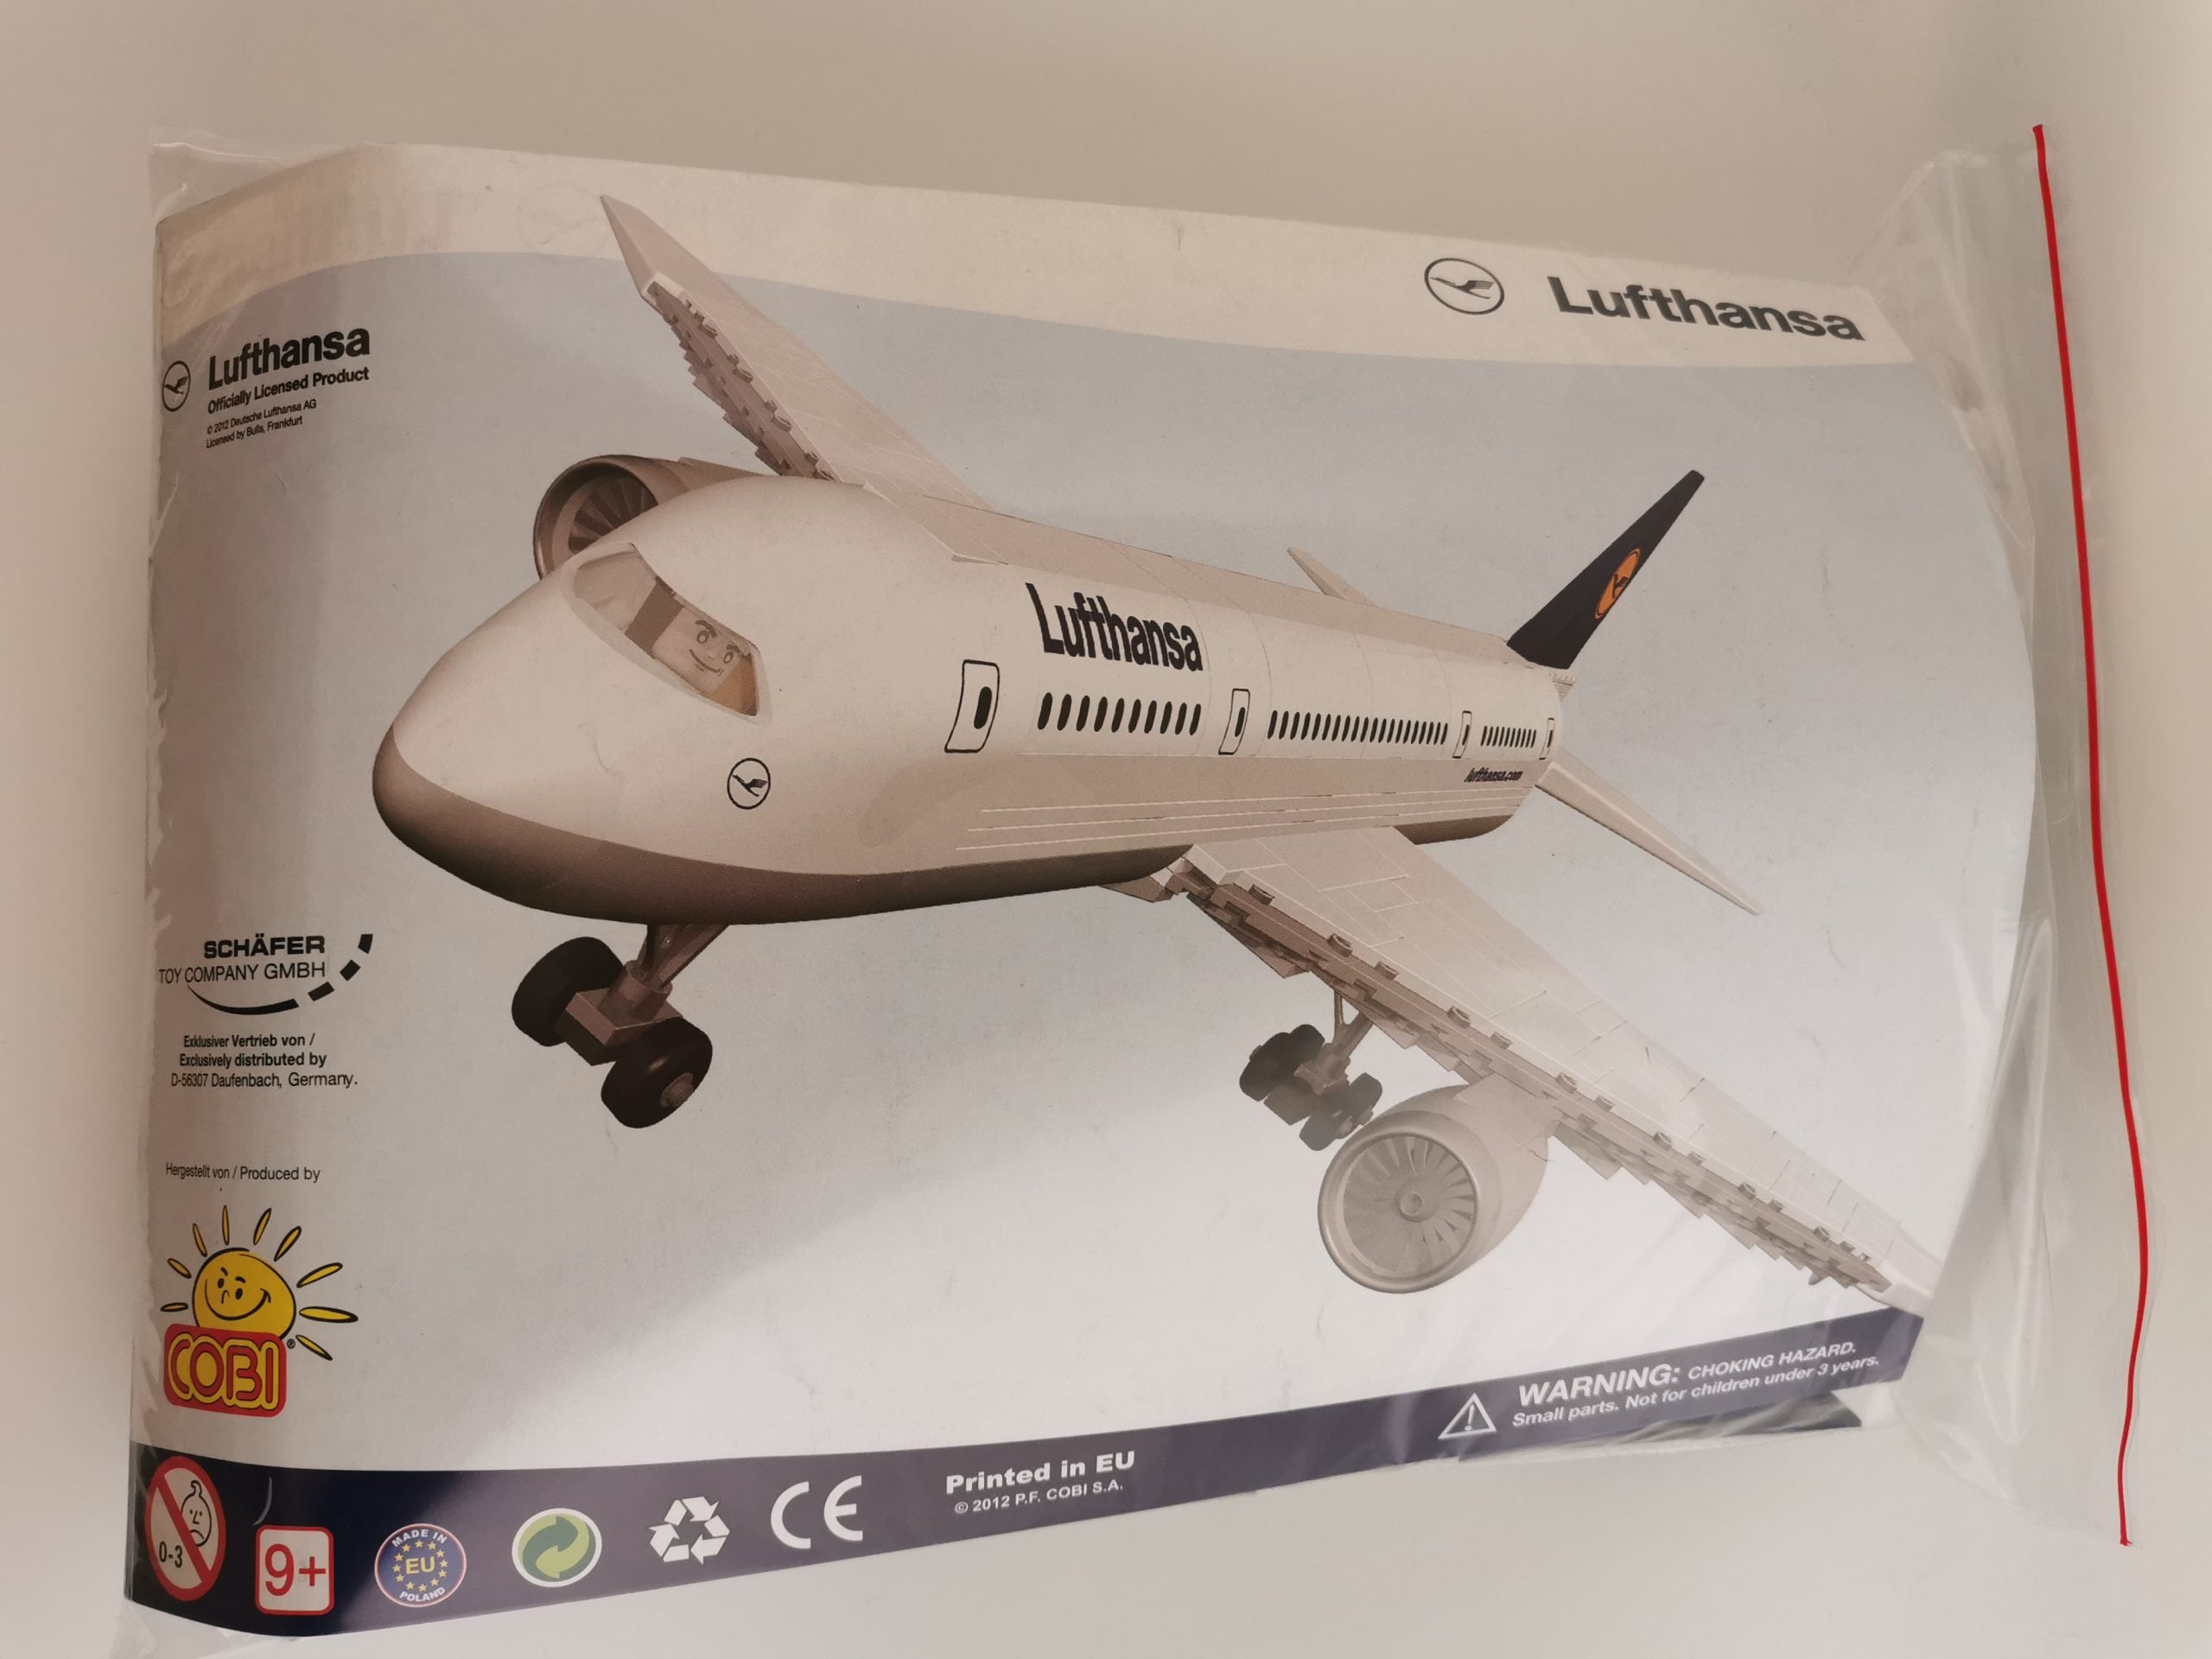 Cobi 099794 Lufthansa LIMITED used